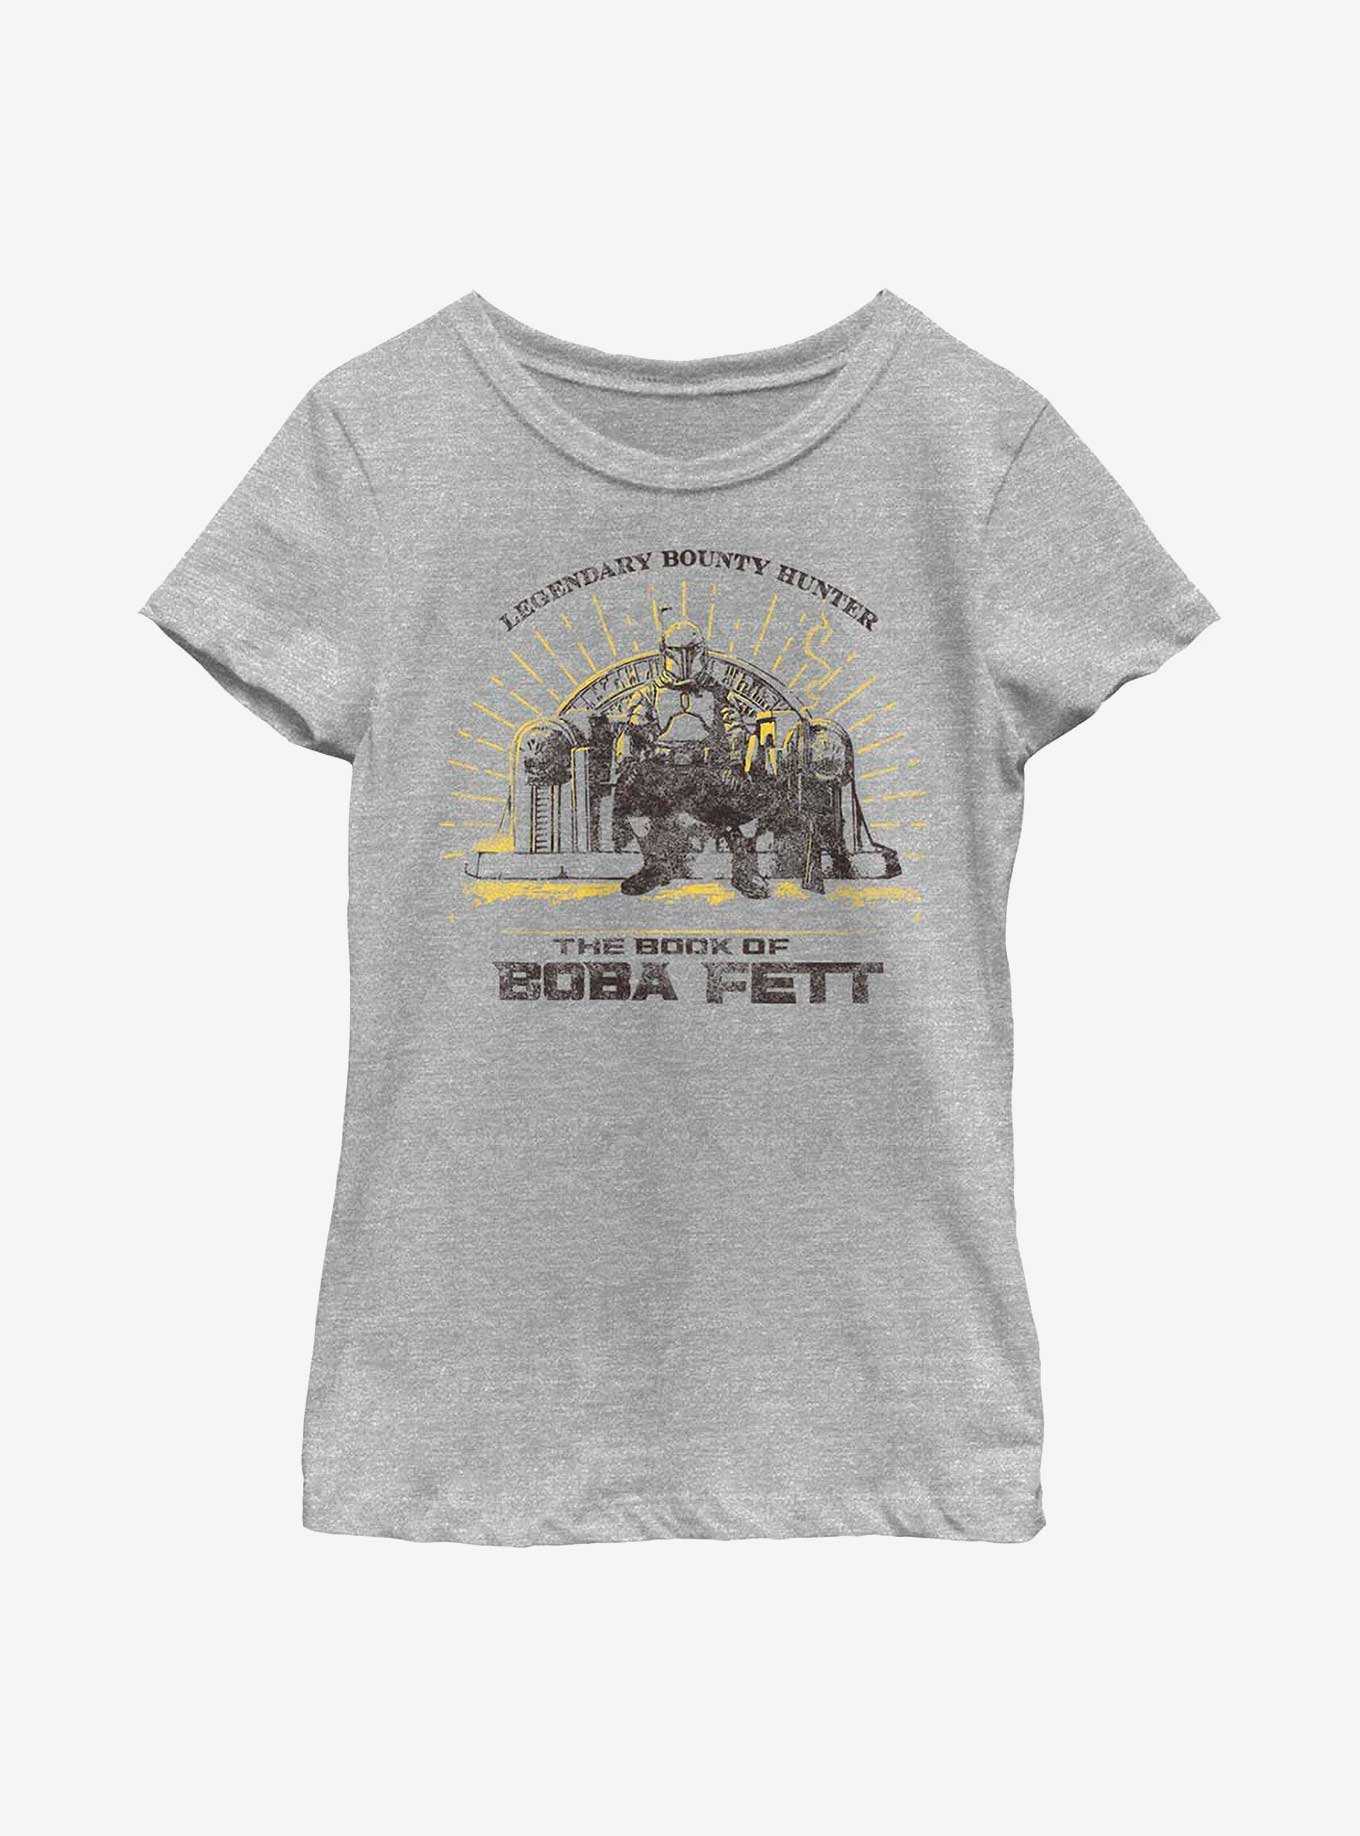 Star Wars: The Book Of Boba Fett Legendary Bounty Hunter Youth Girls T-Shirt, , hi-res